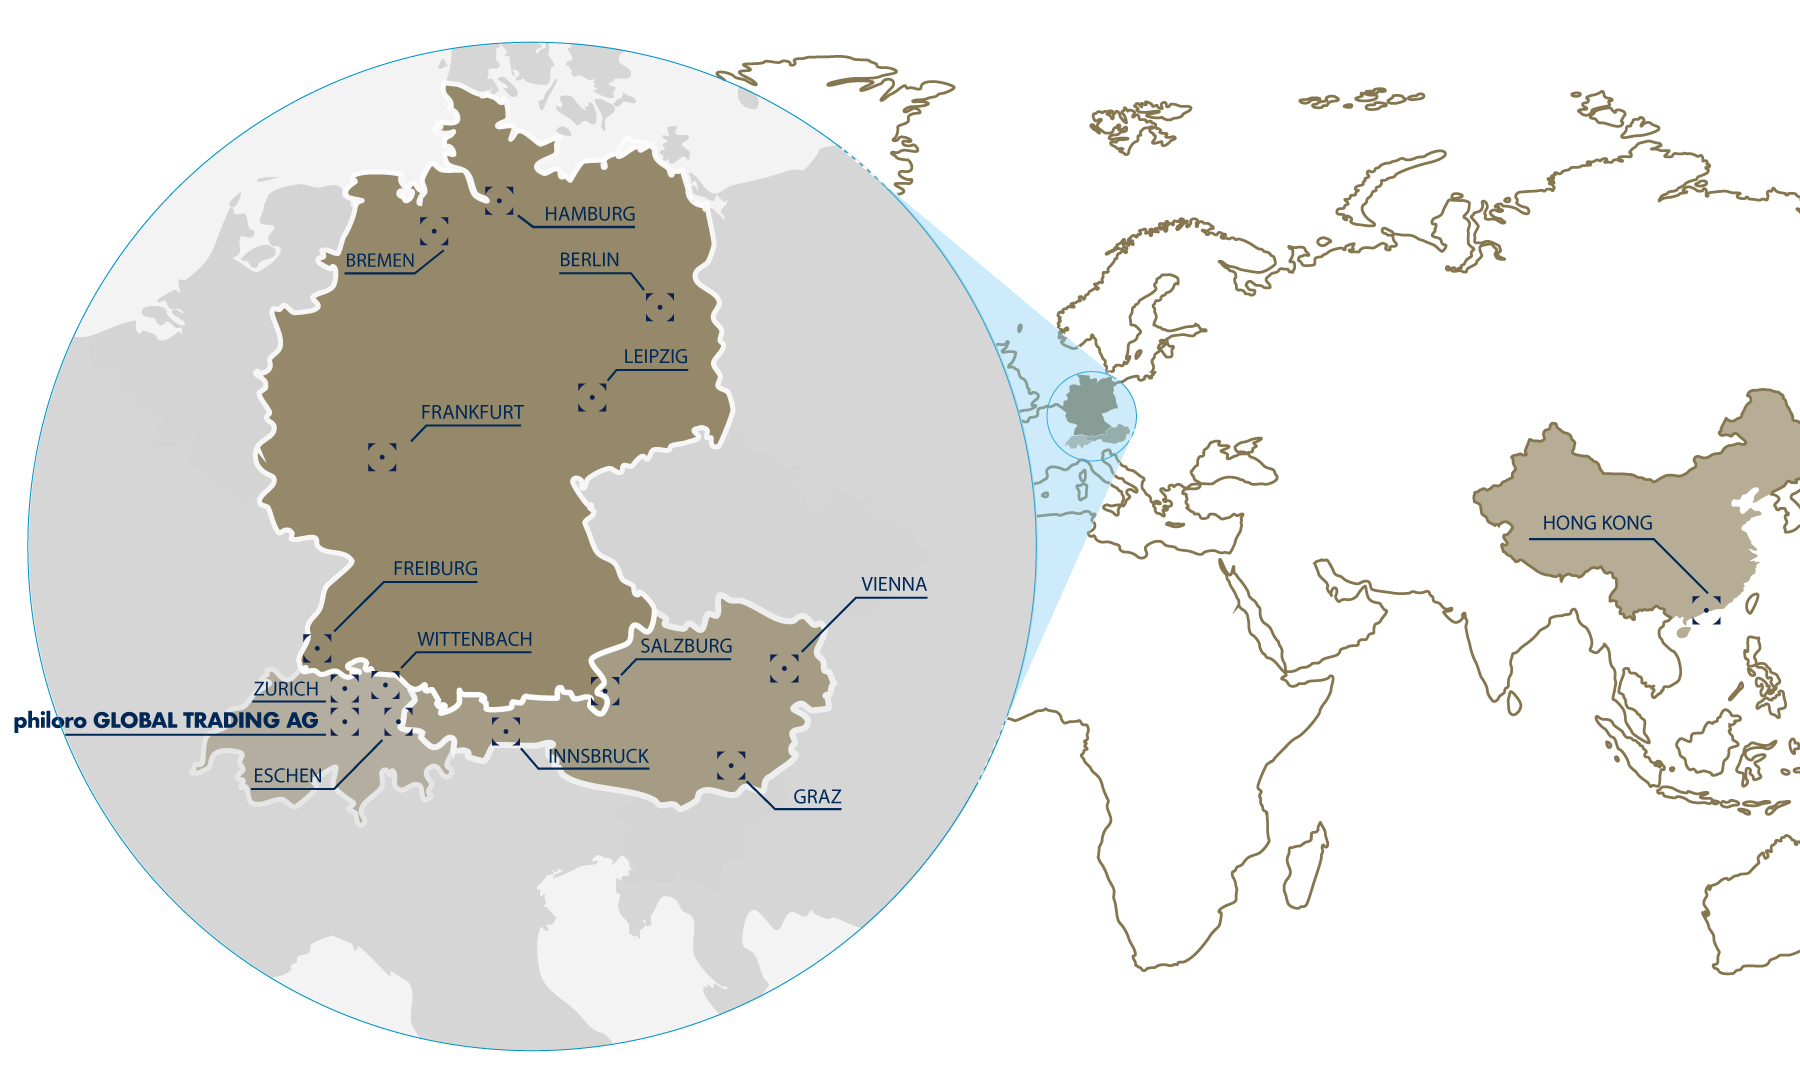 philoro global trading map